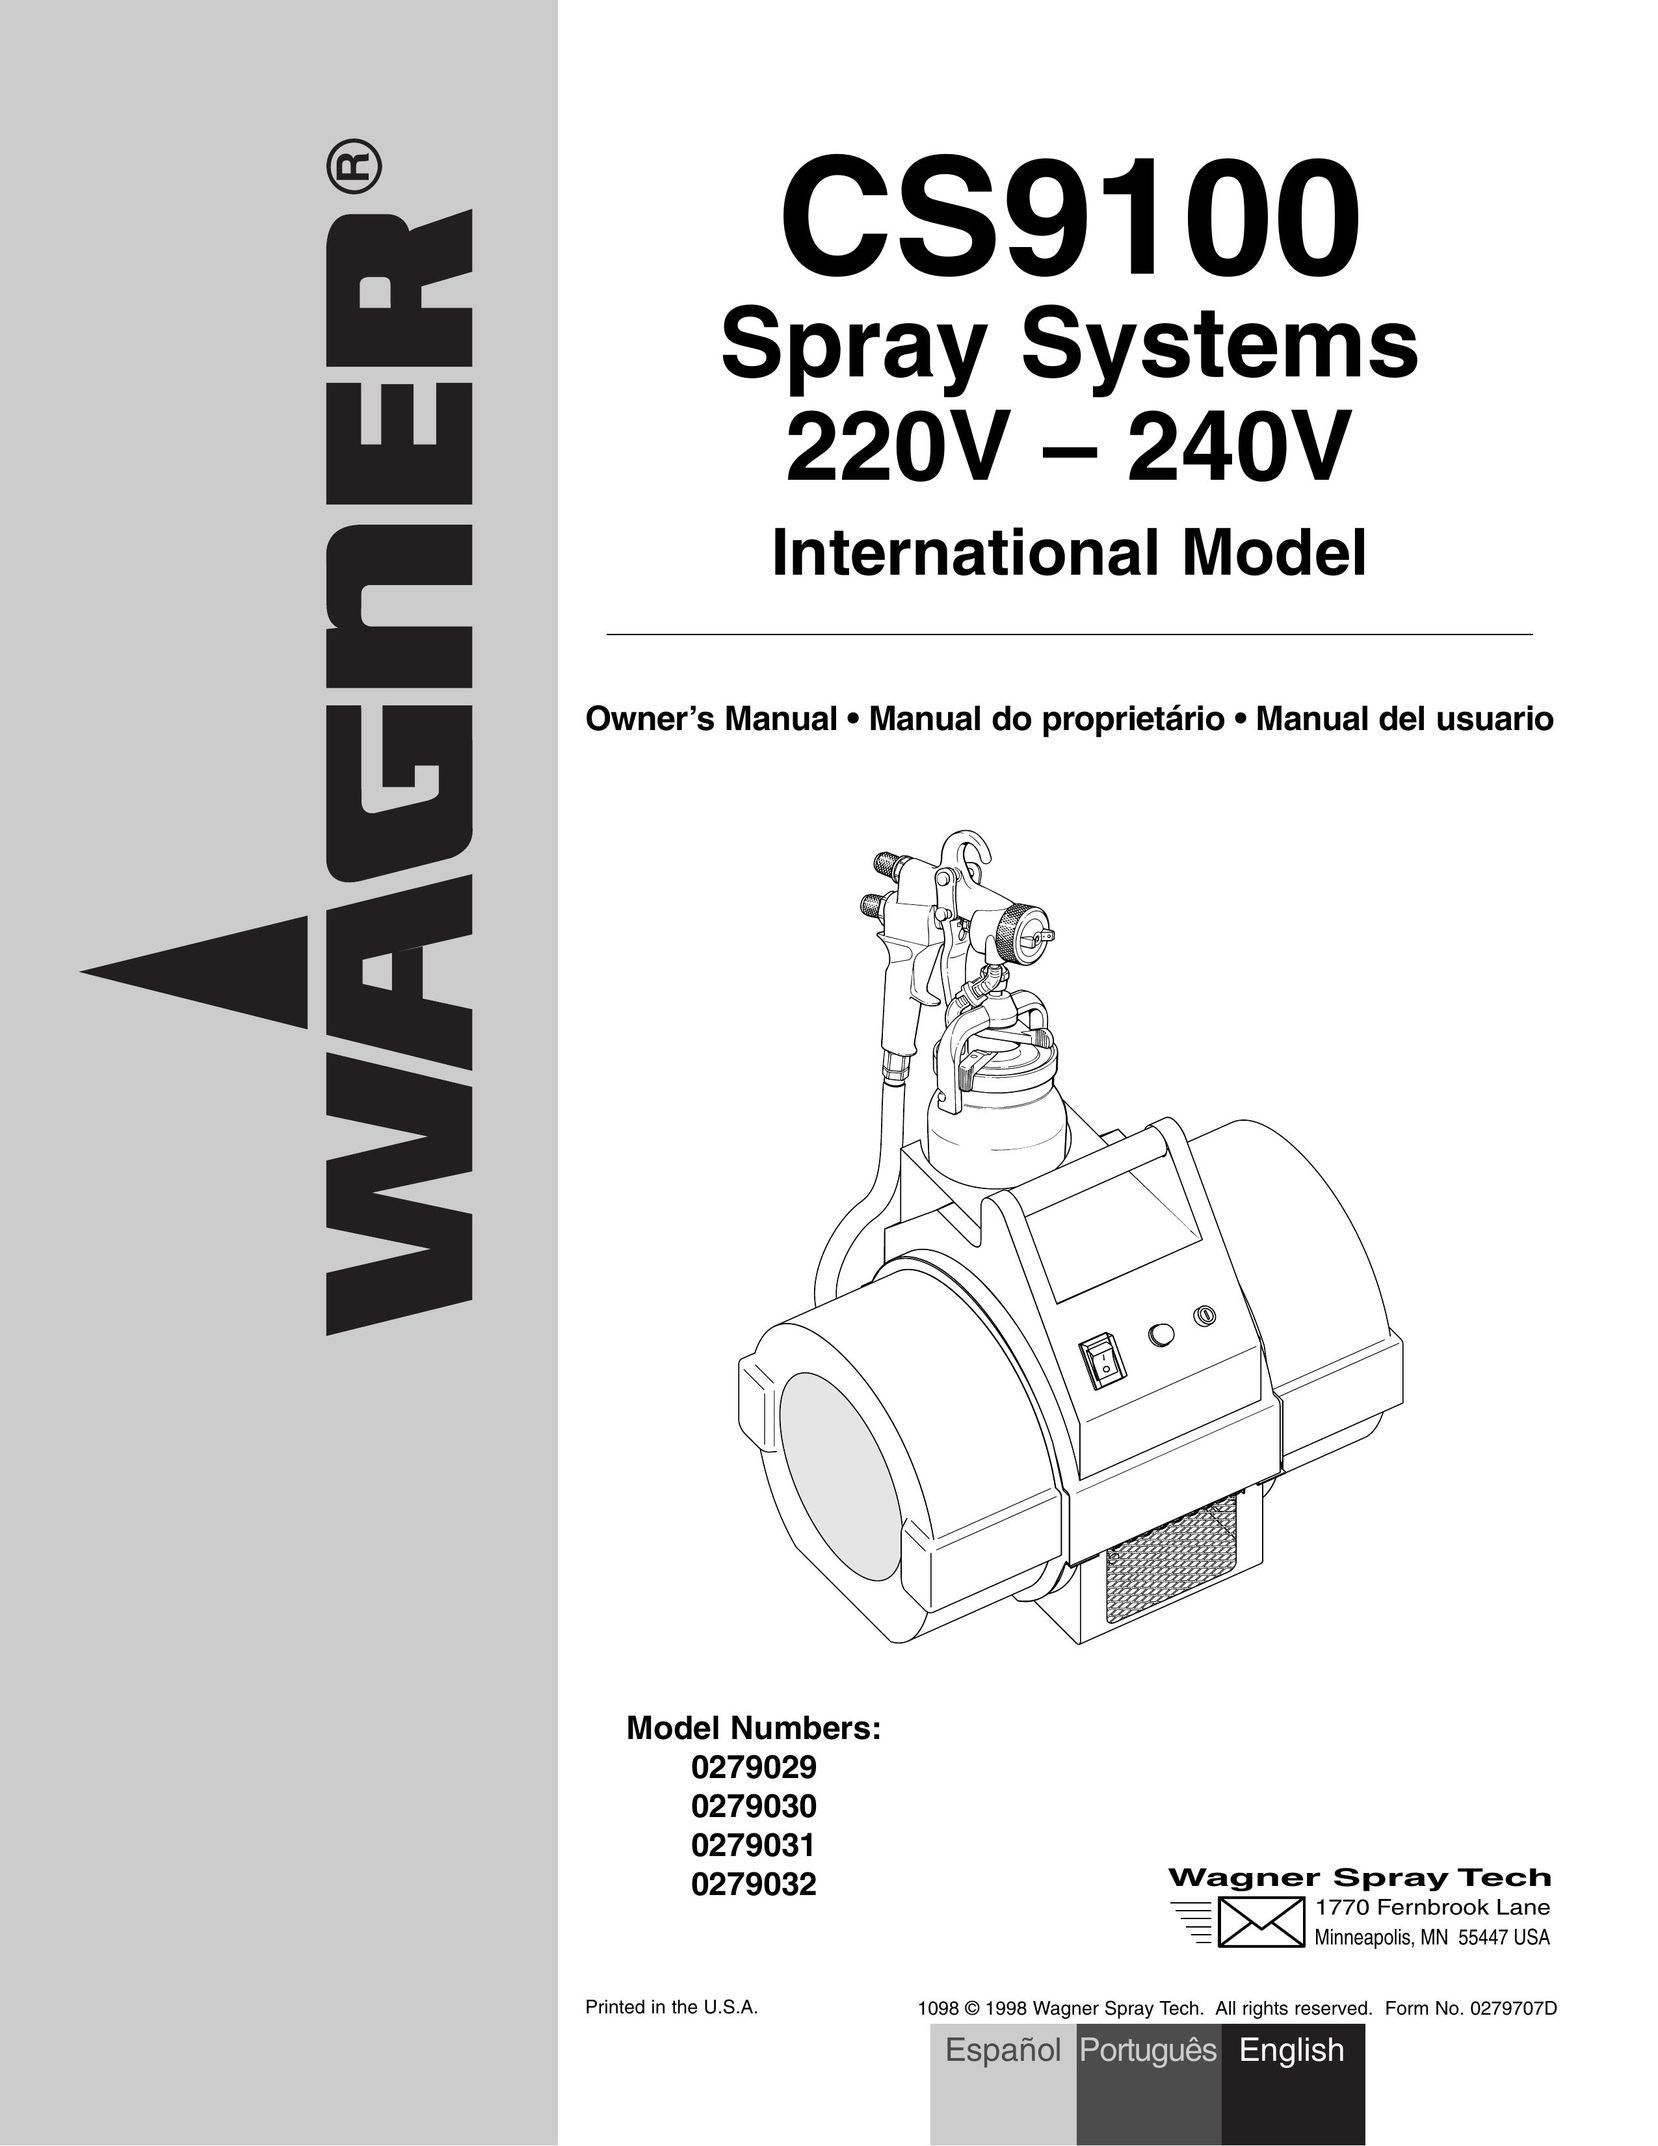 Wagner SprayTech 279032 Paint Sprayer User Manual